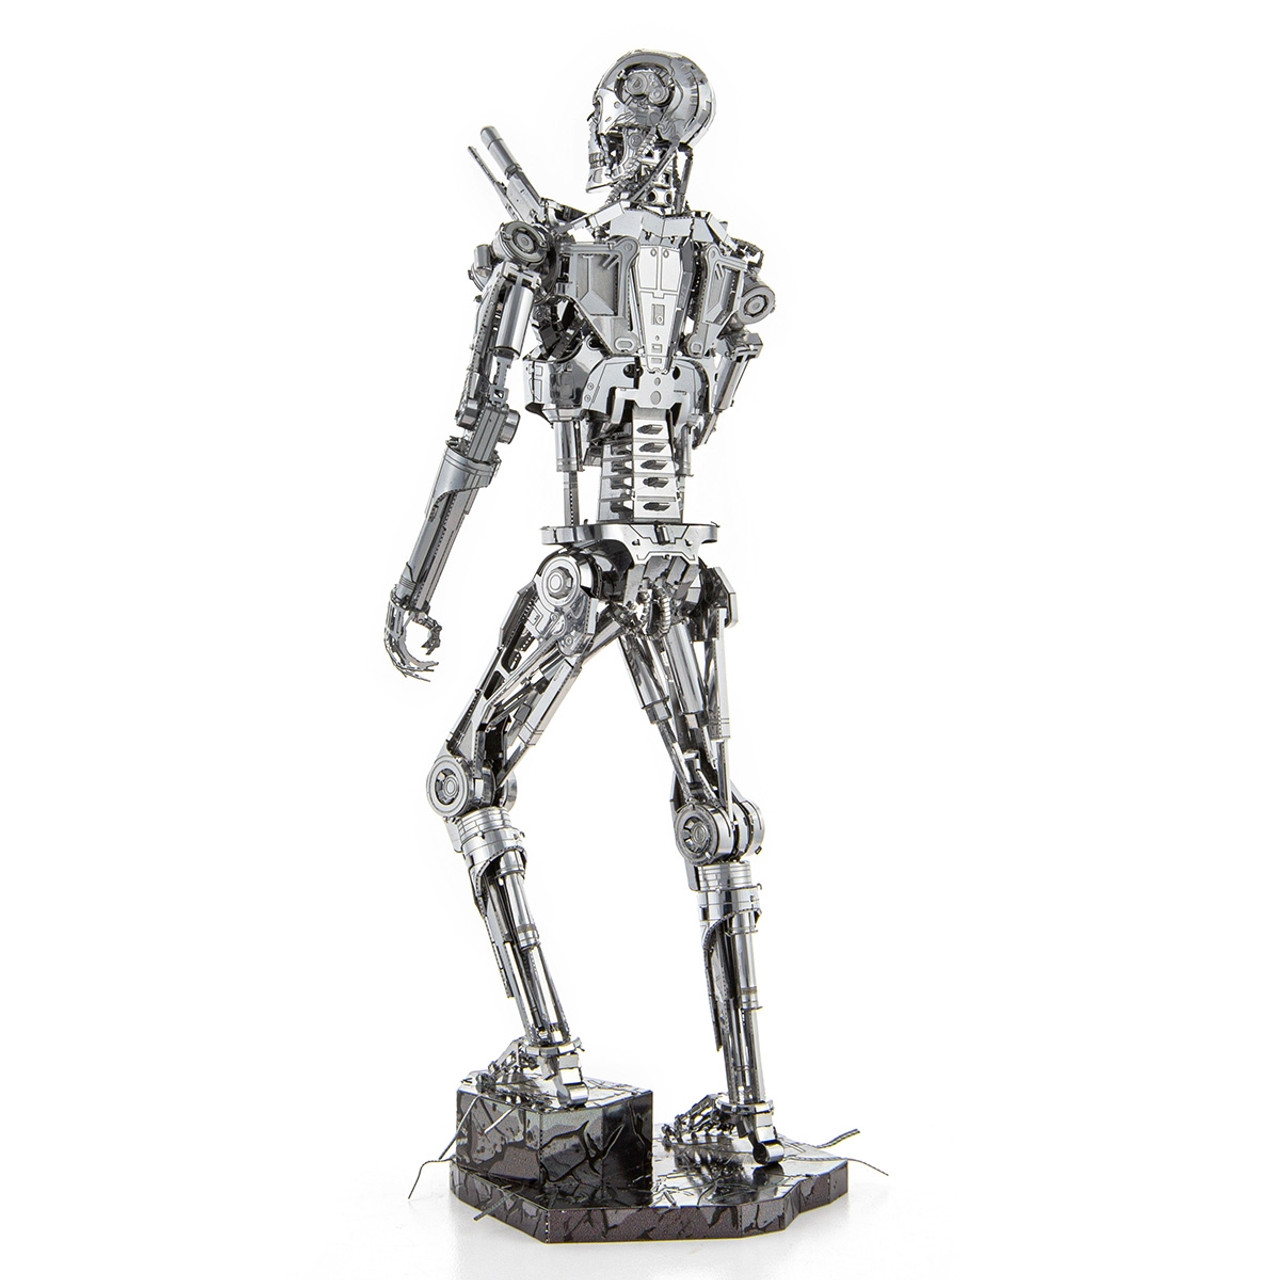 The Terminator T-800 Endoskeleton Metal Model Kit | Metal Earth